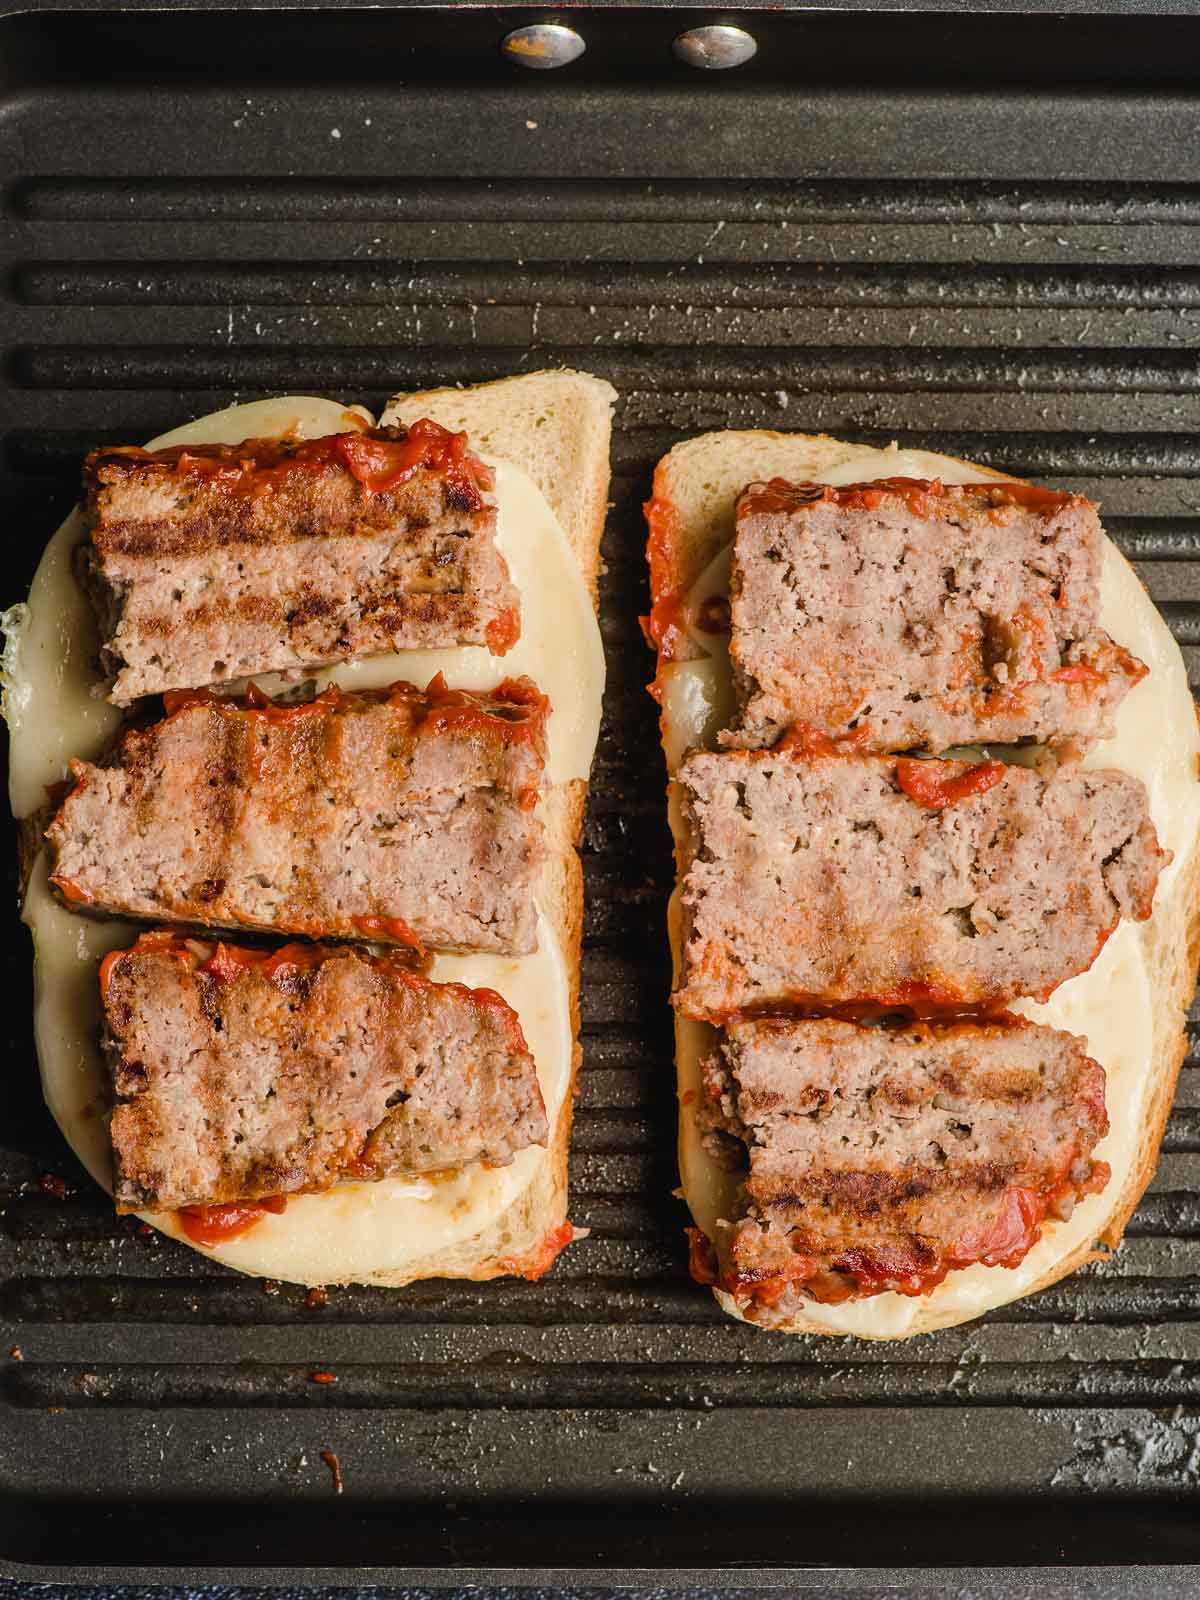 Two halves of a hot meatloaf sandwich on a griddle.